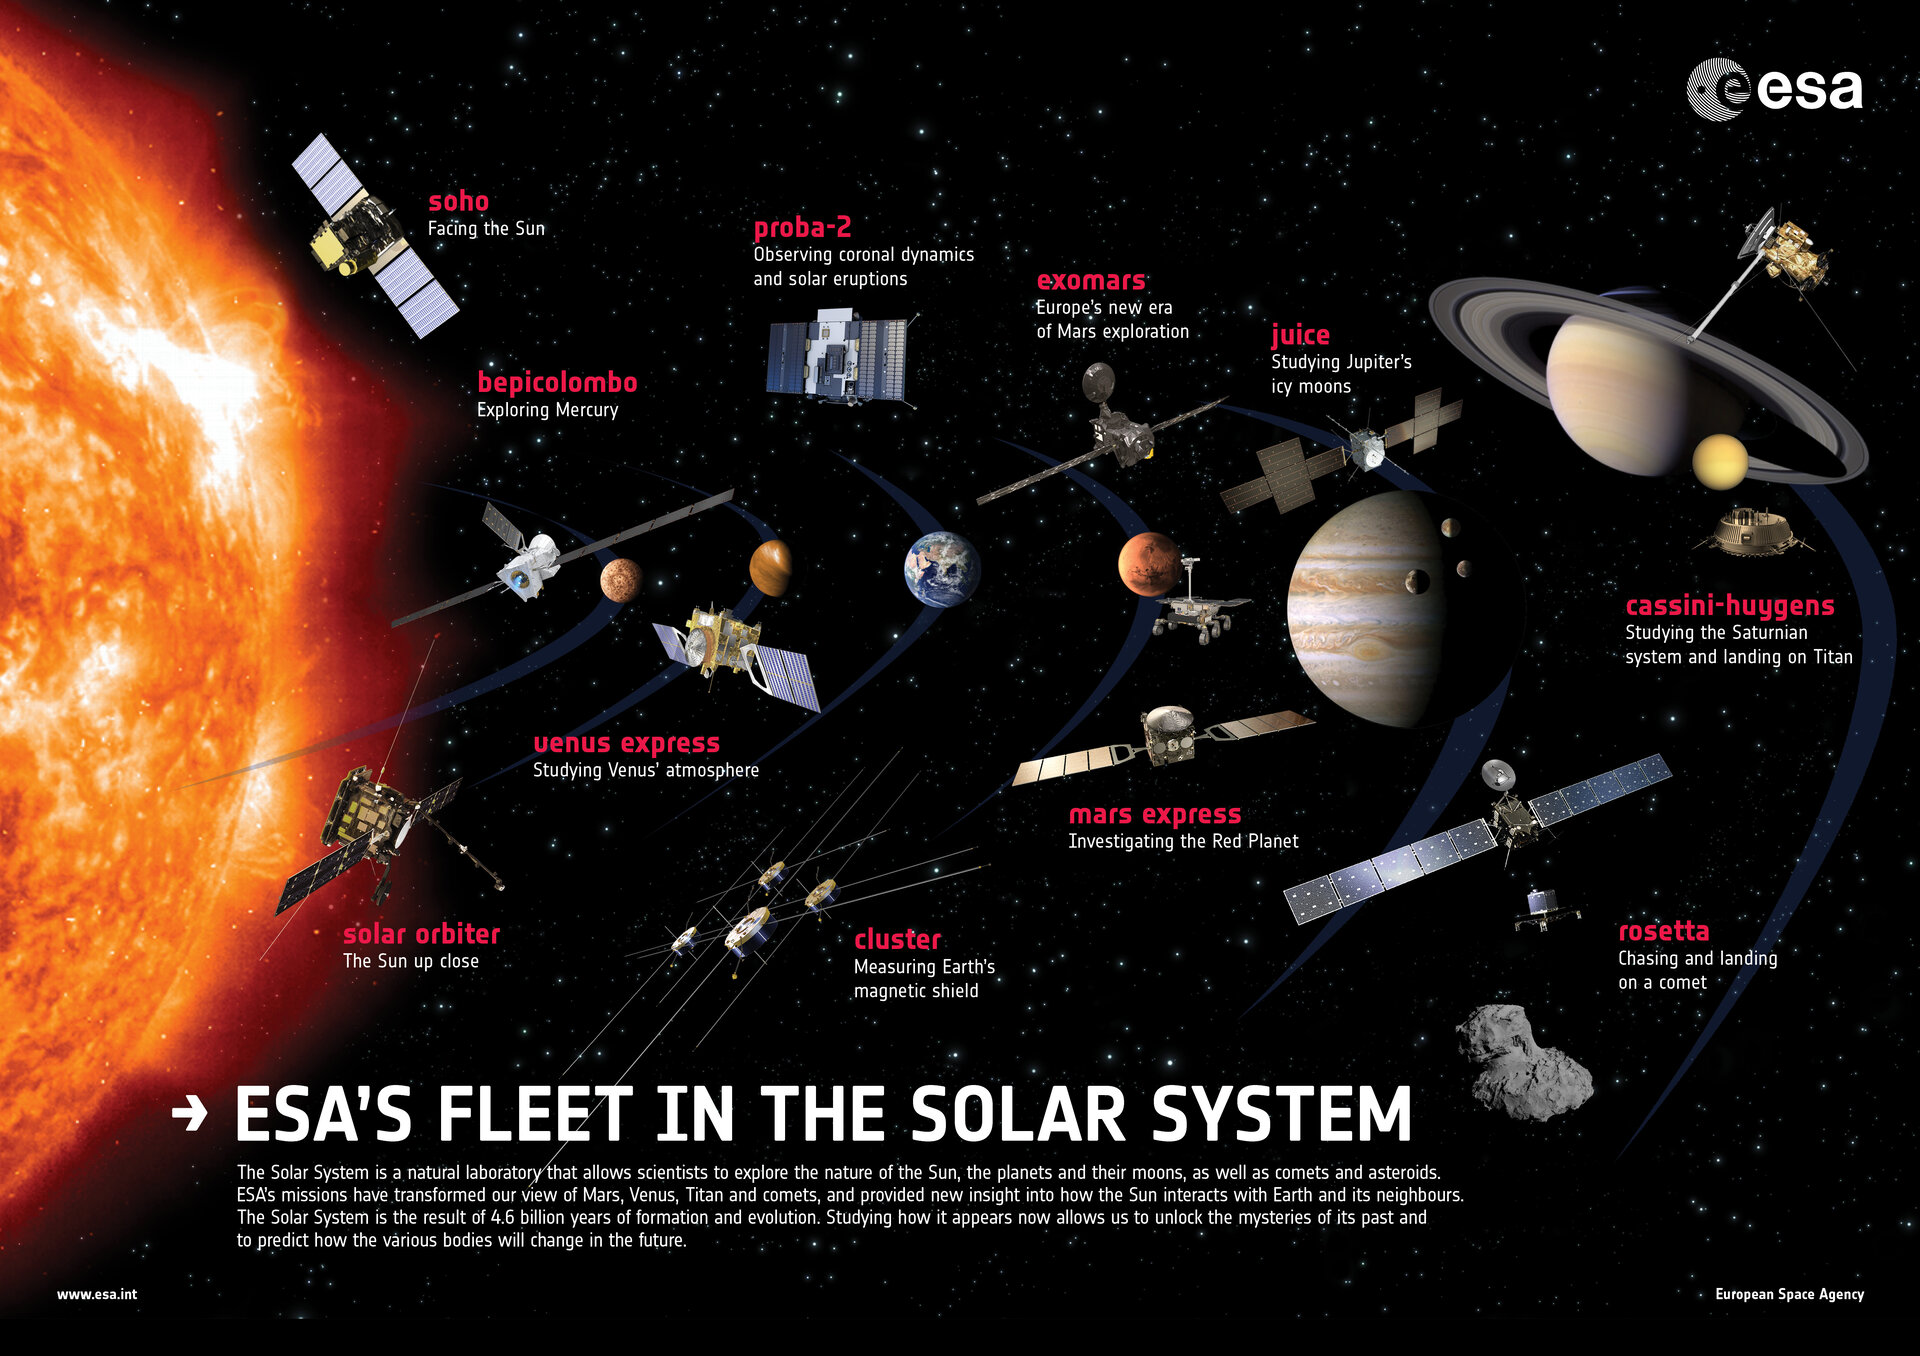 ESA's fleet in the Solar System poster 2017